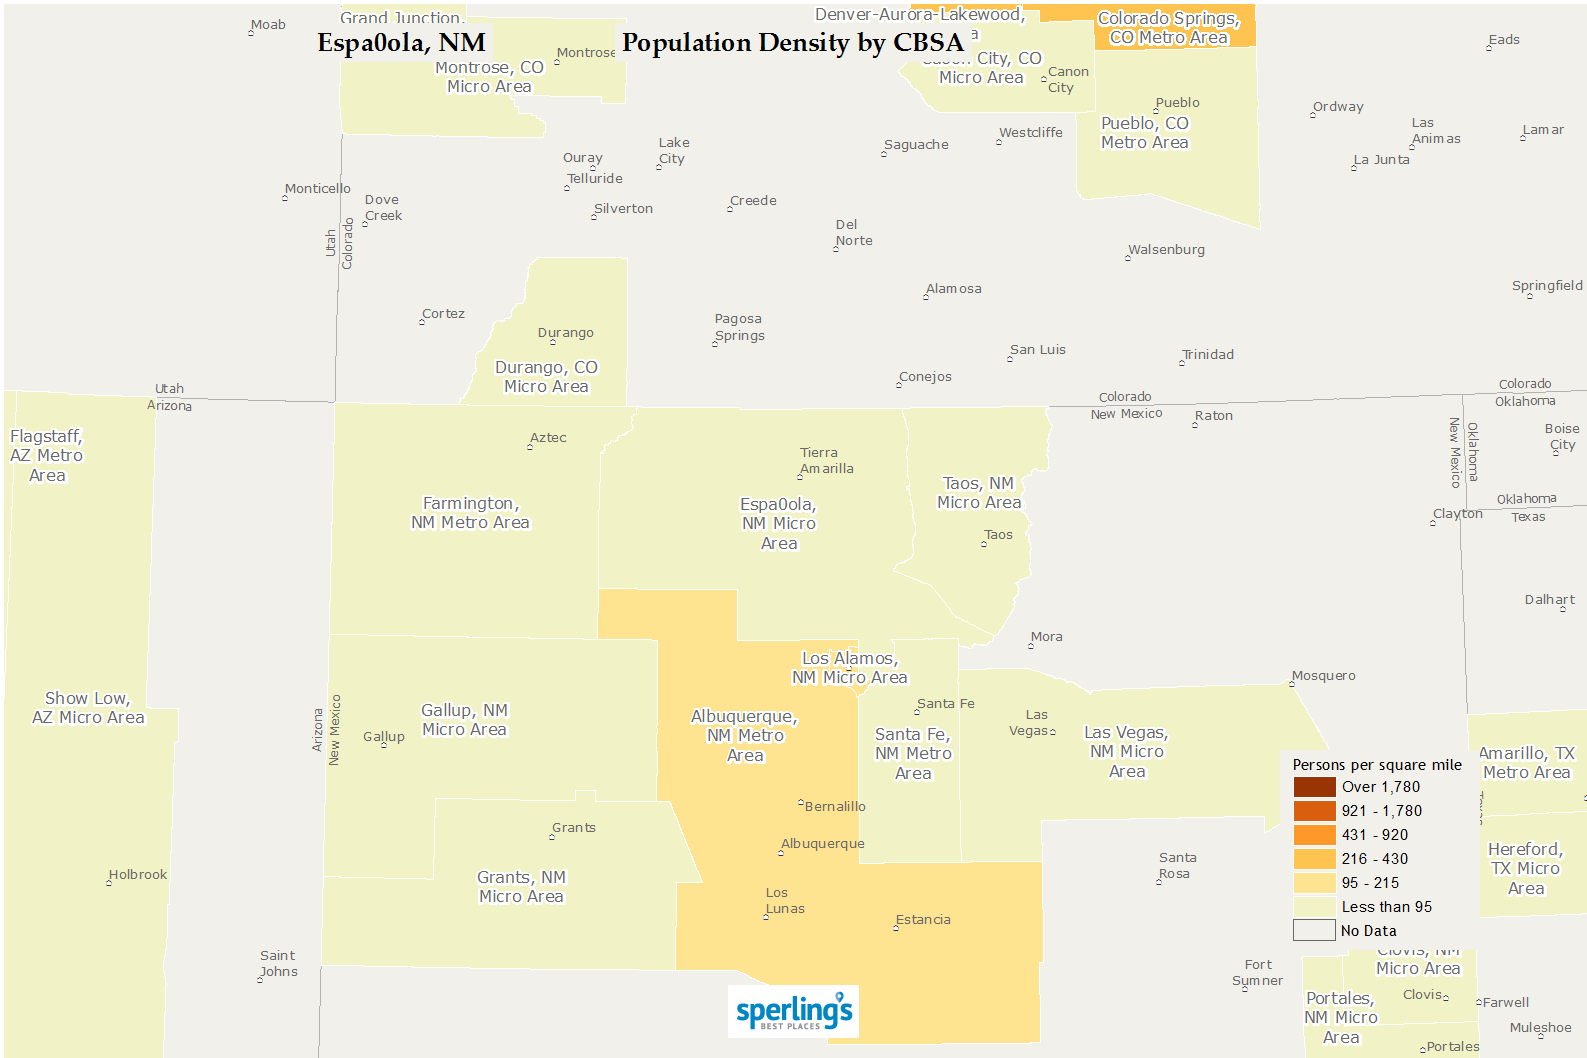 Population Density